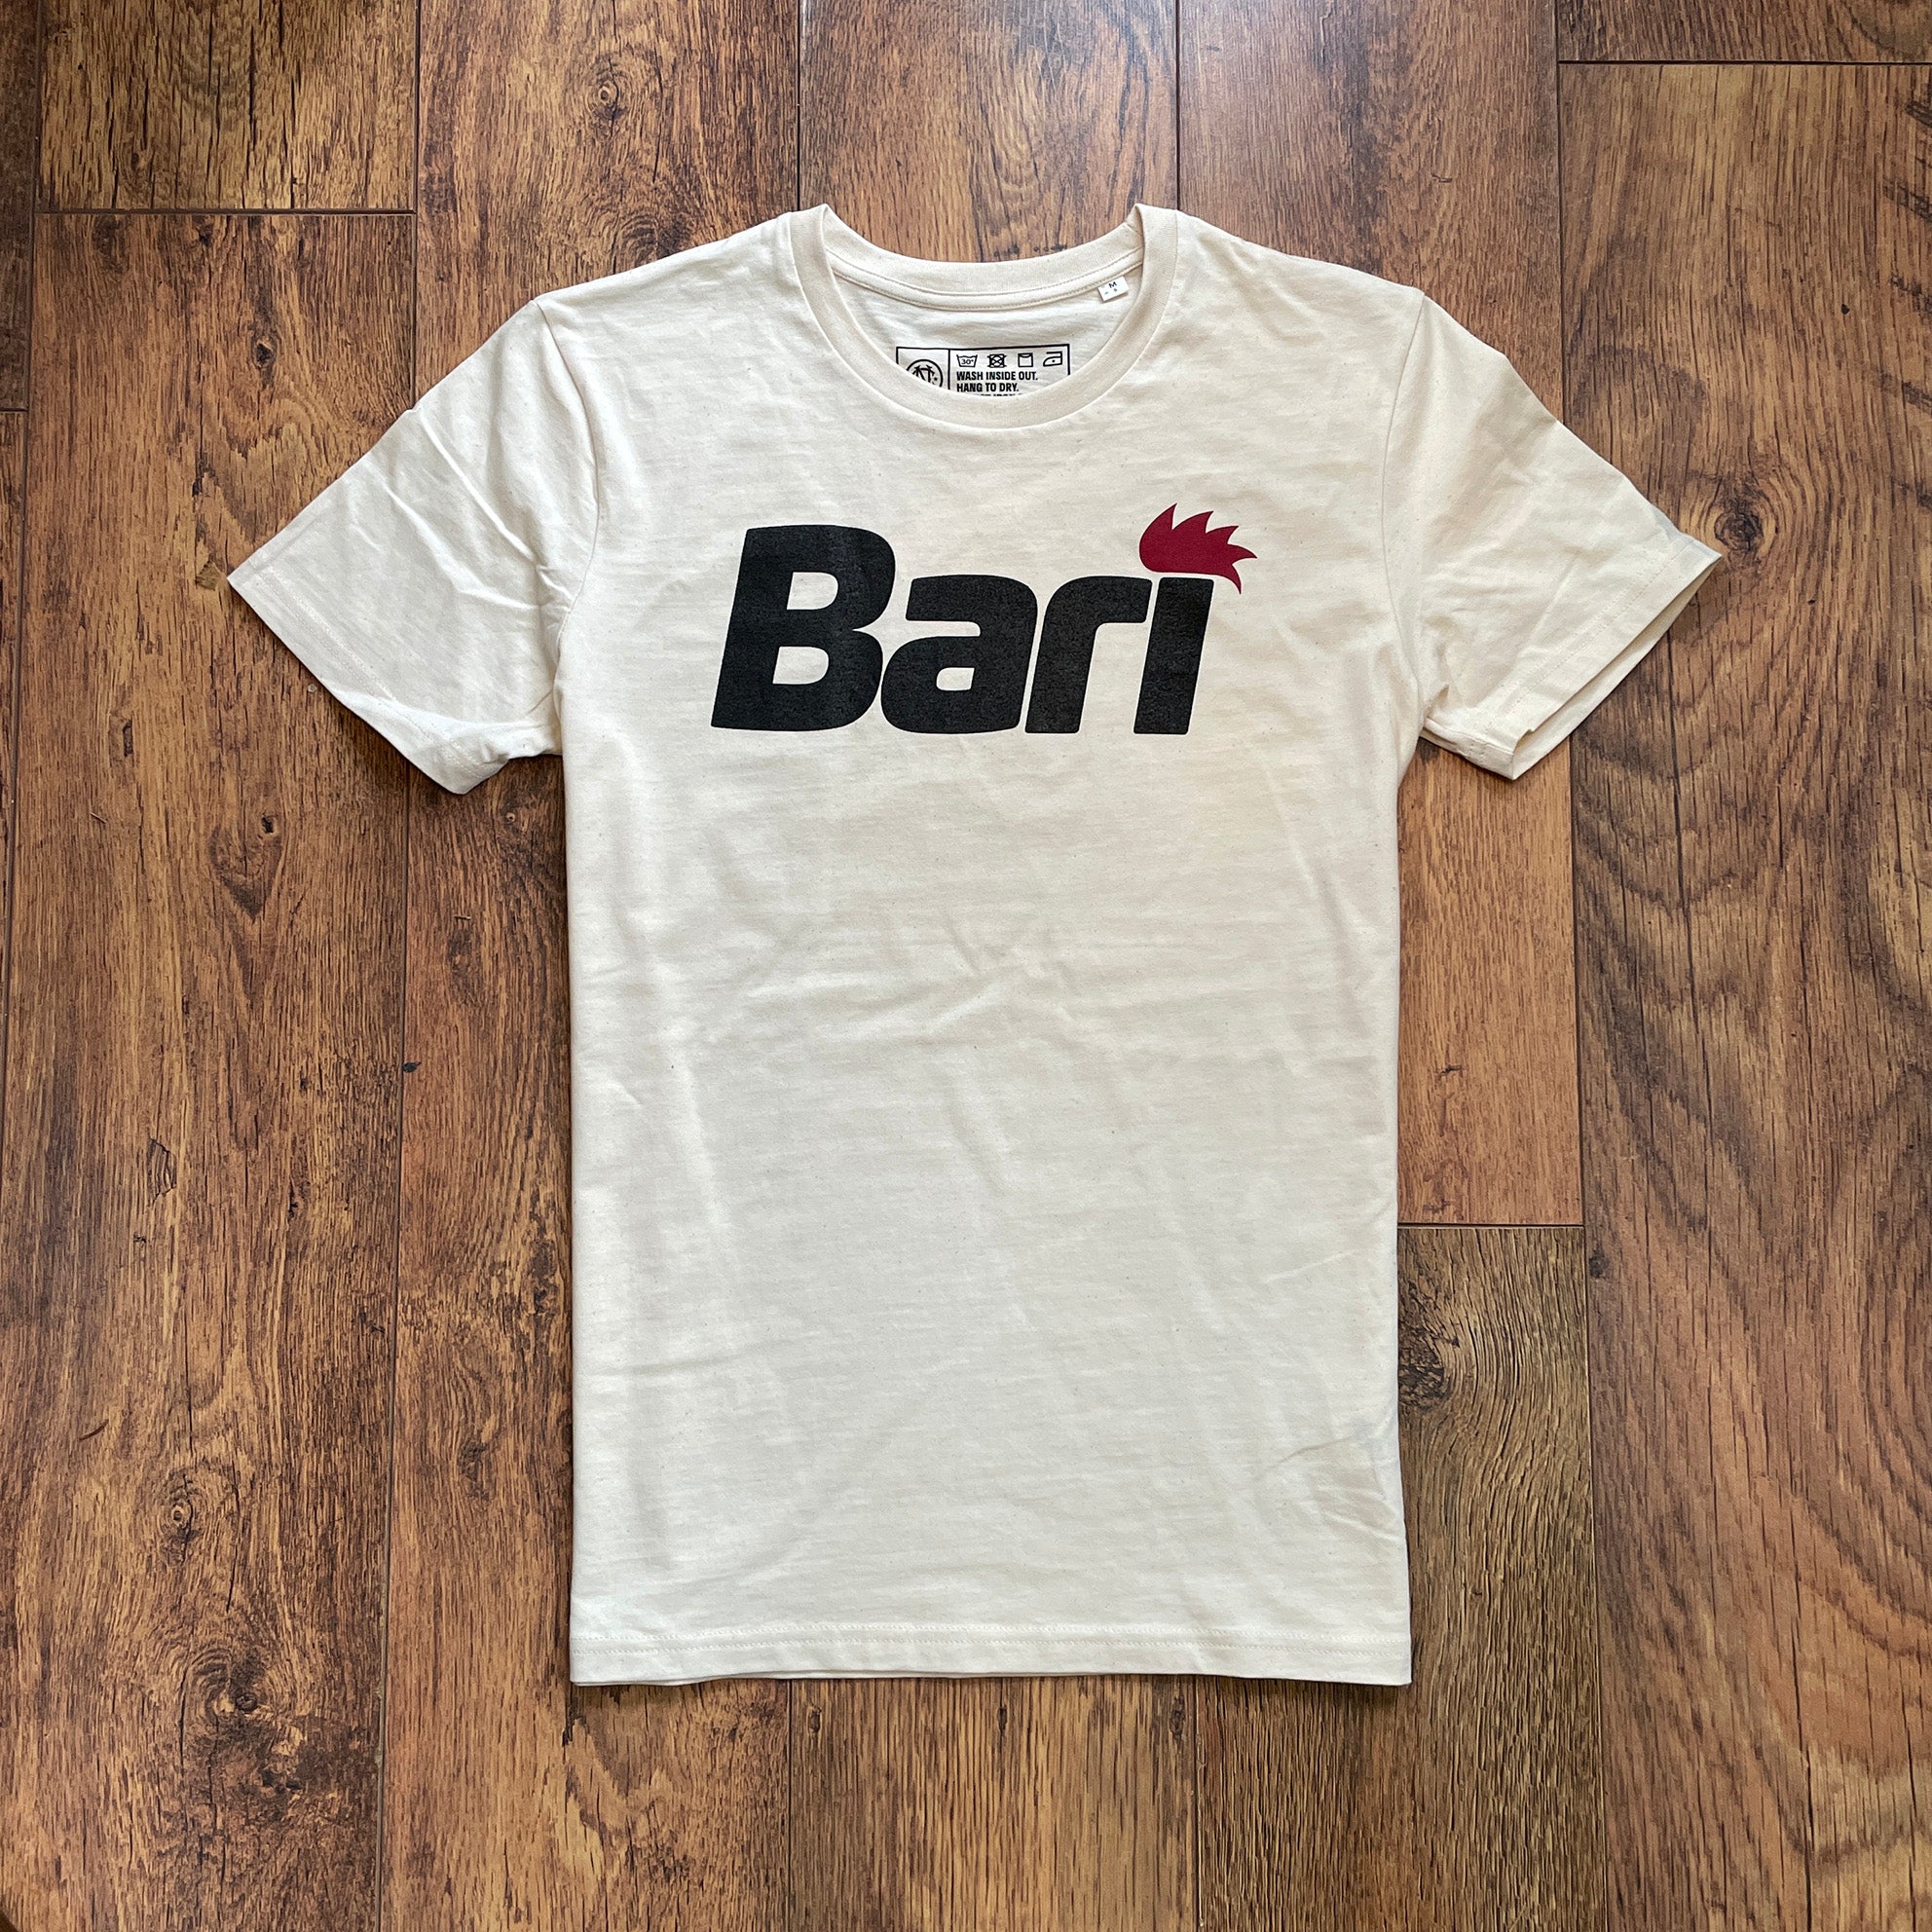 Bari shirt t-shirt